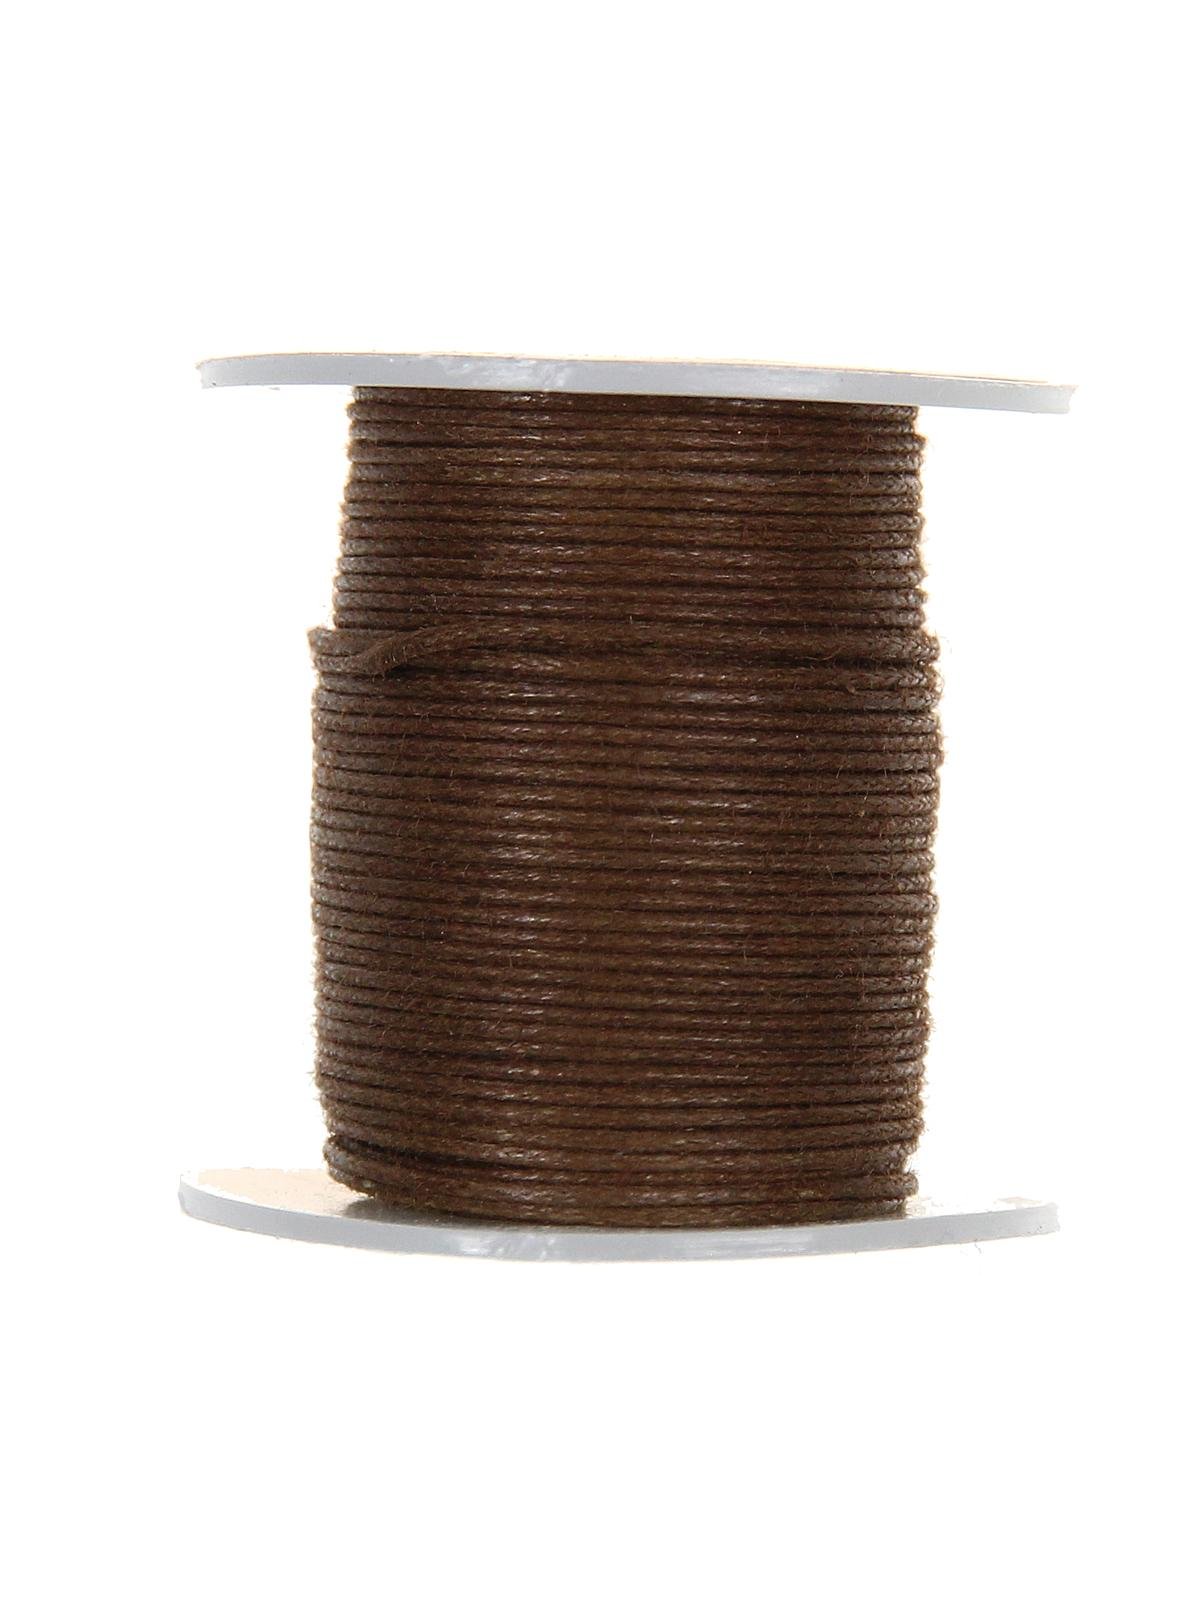 Hemptique Waxed Cotton Cord - Brown, 0.5 mm